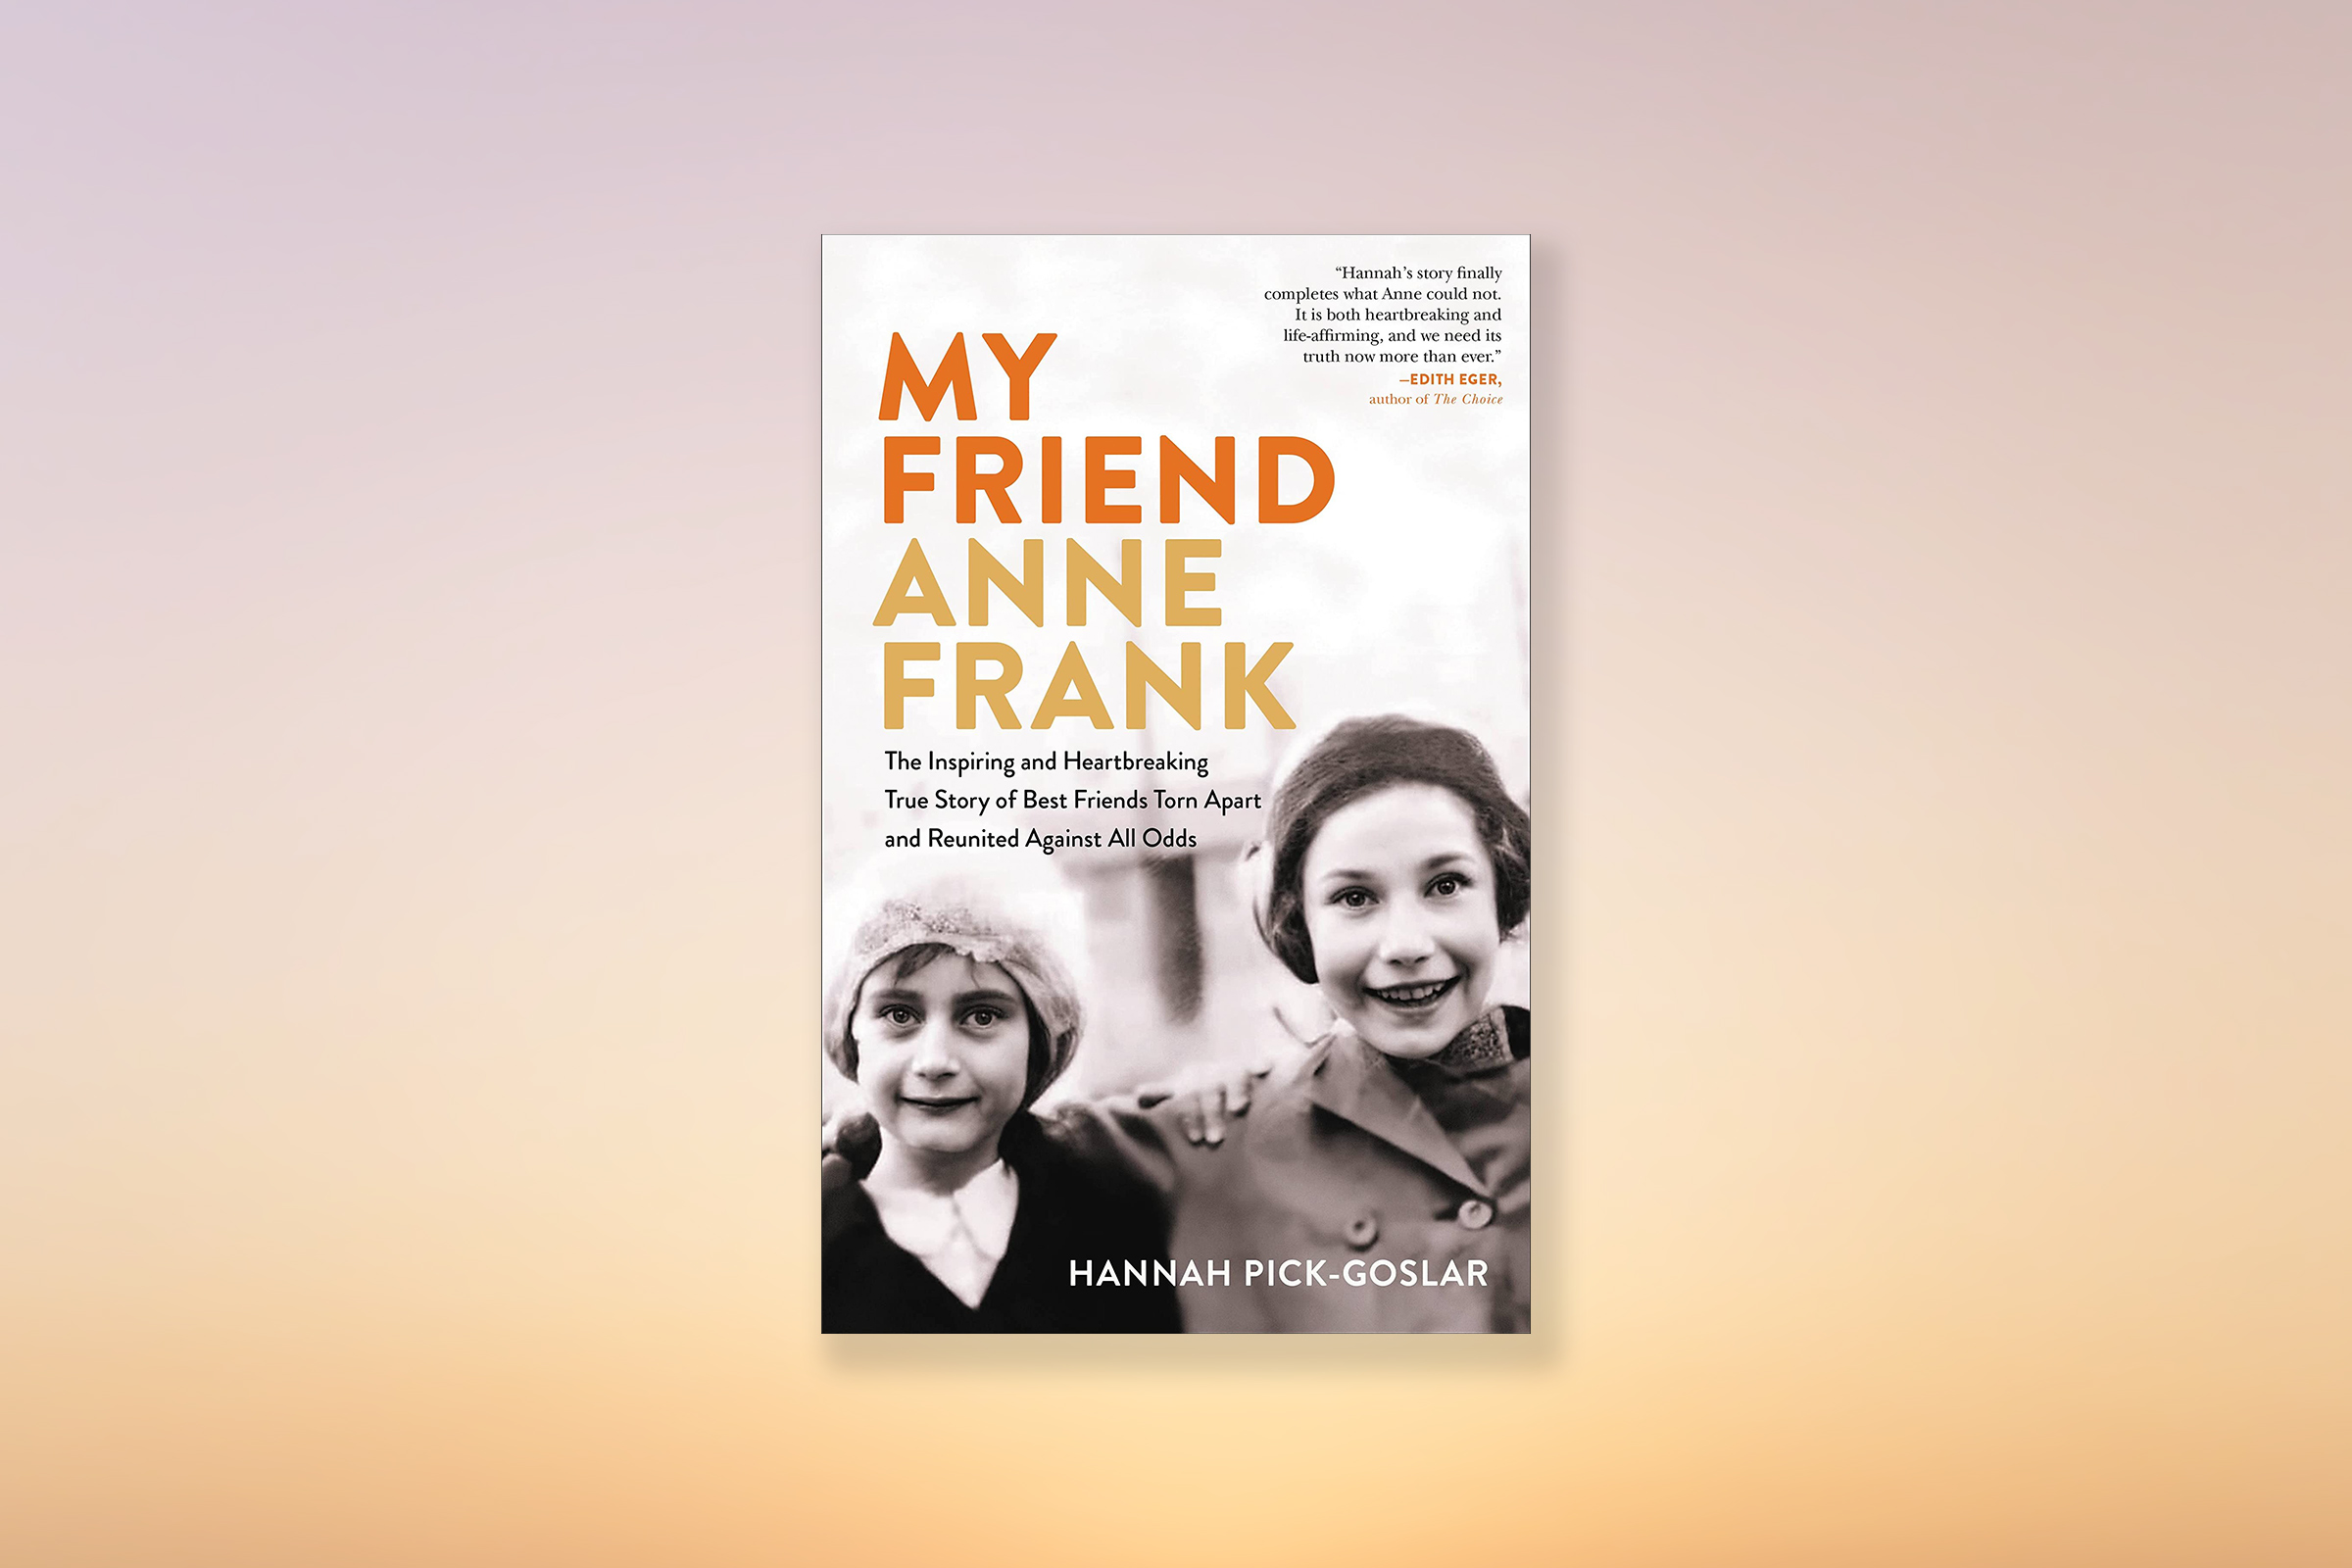 My Friend Anne Frank by Hannah Pick-Goslar